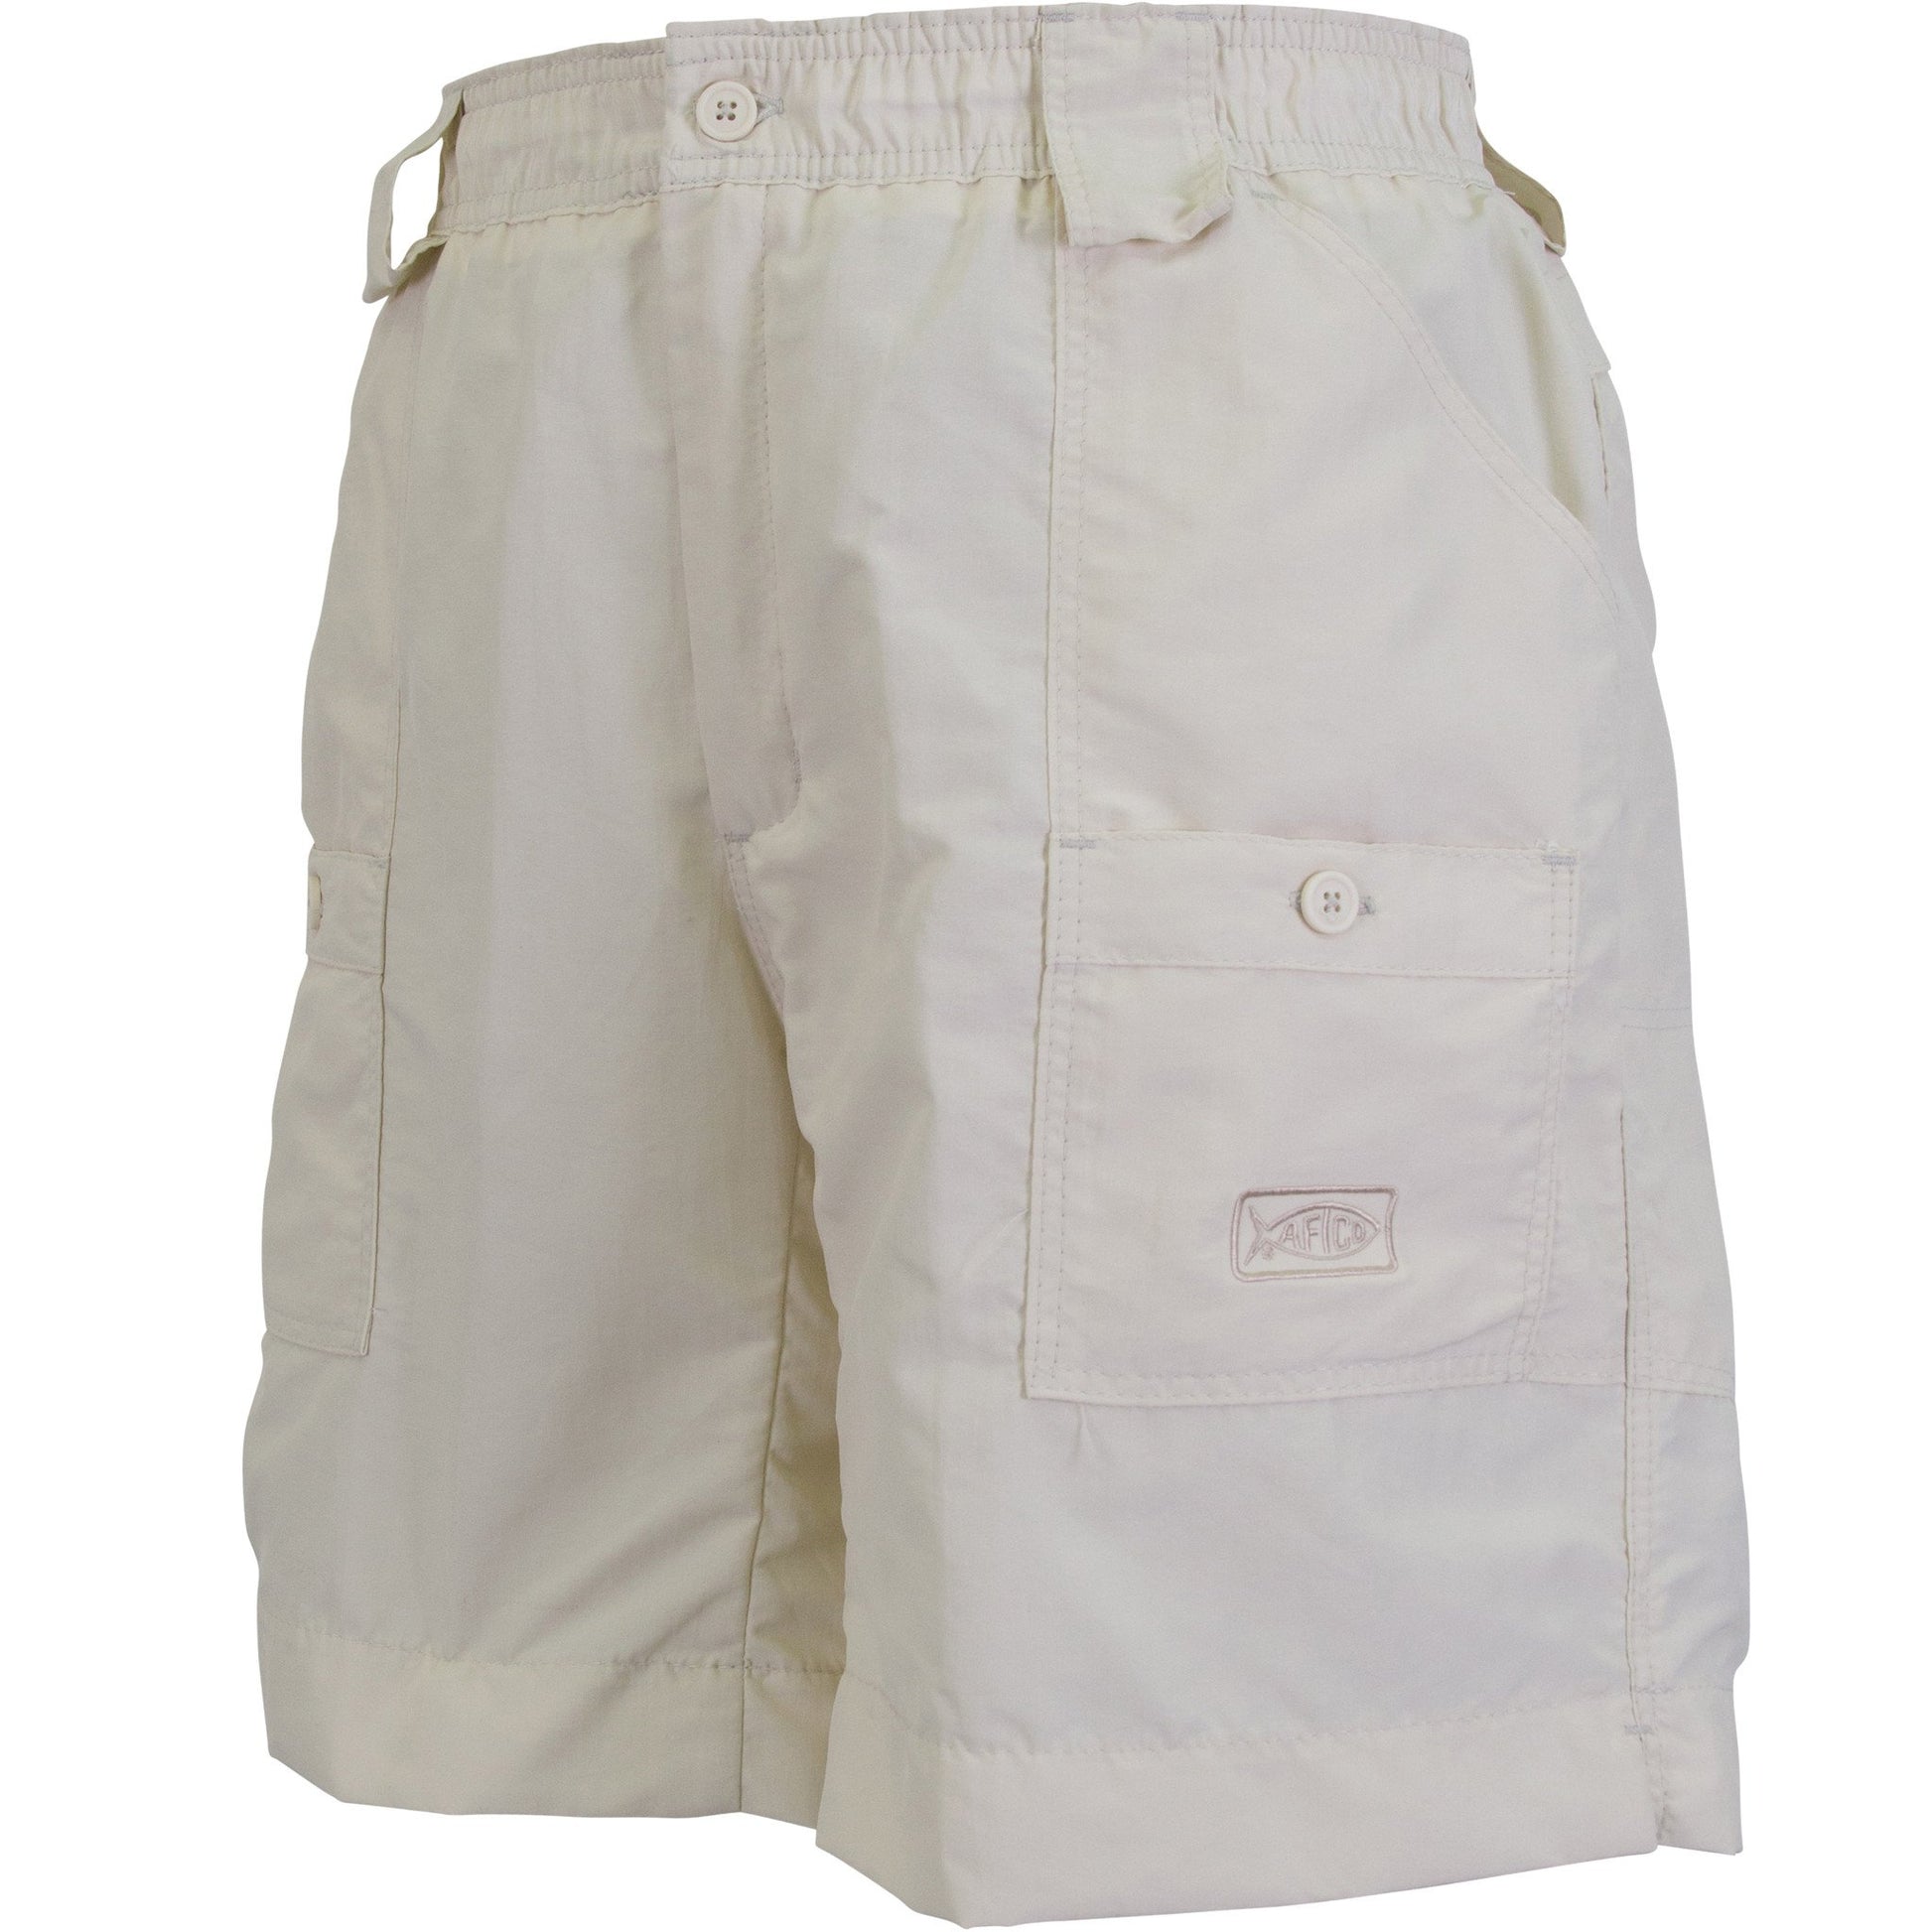 AFTCO Original Fishing Shorts - Mint - 36